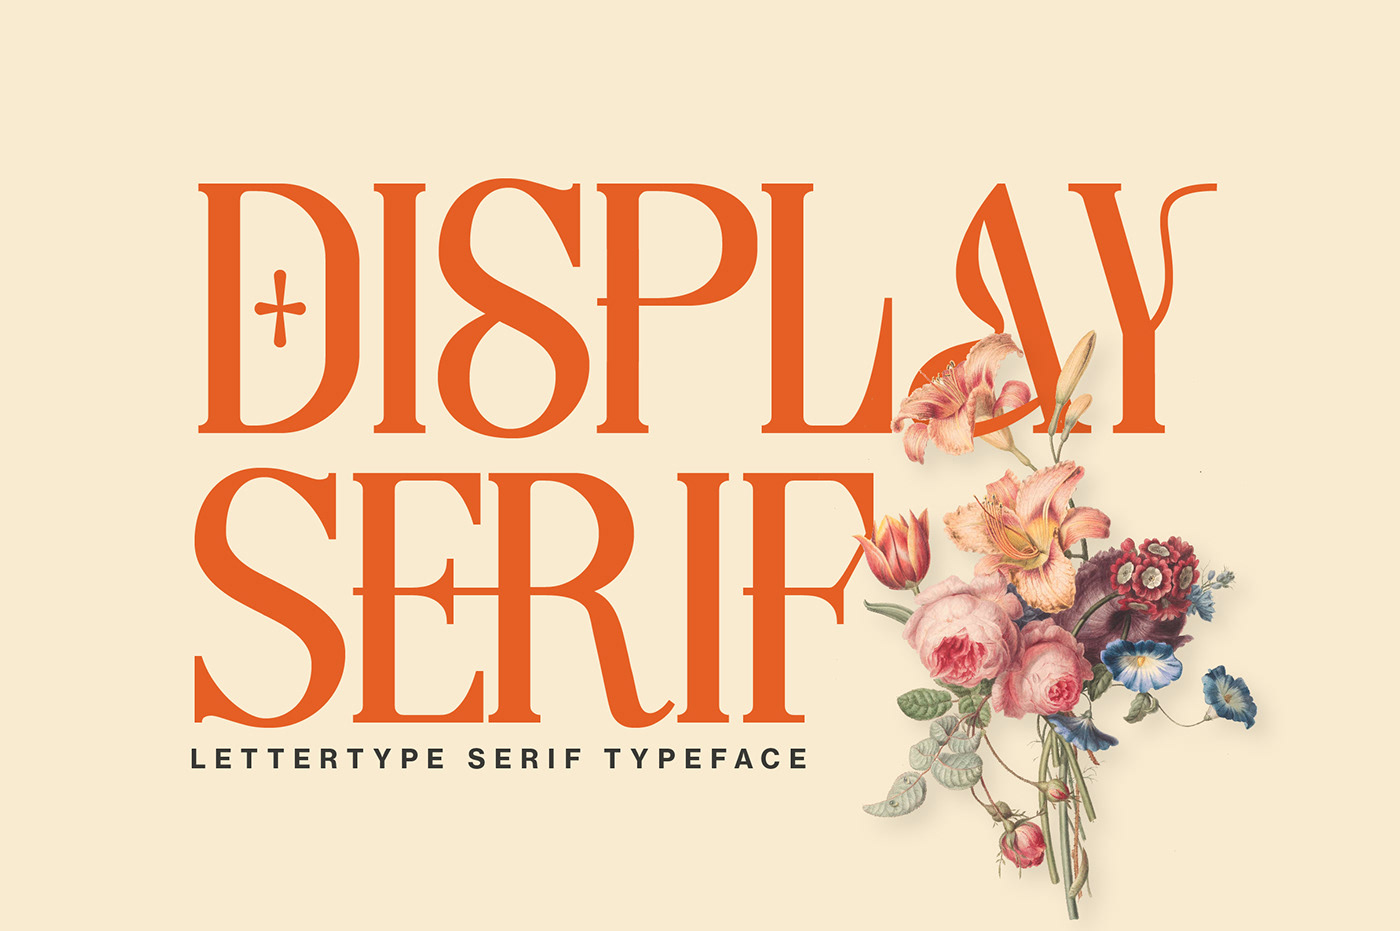 aesthetic serif elegant experiment experimental Display logo magazine Fashion  Headline